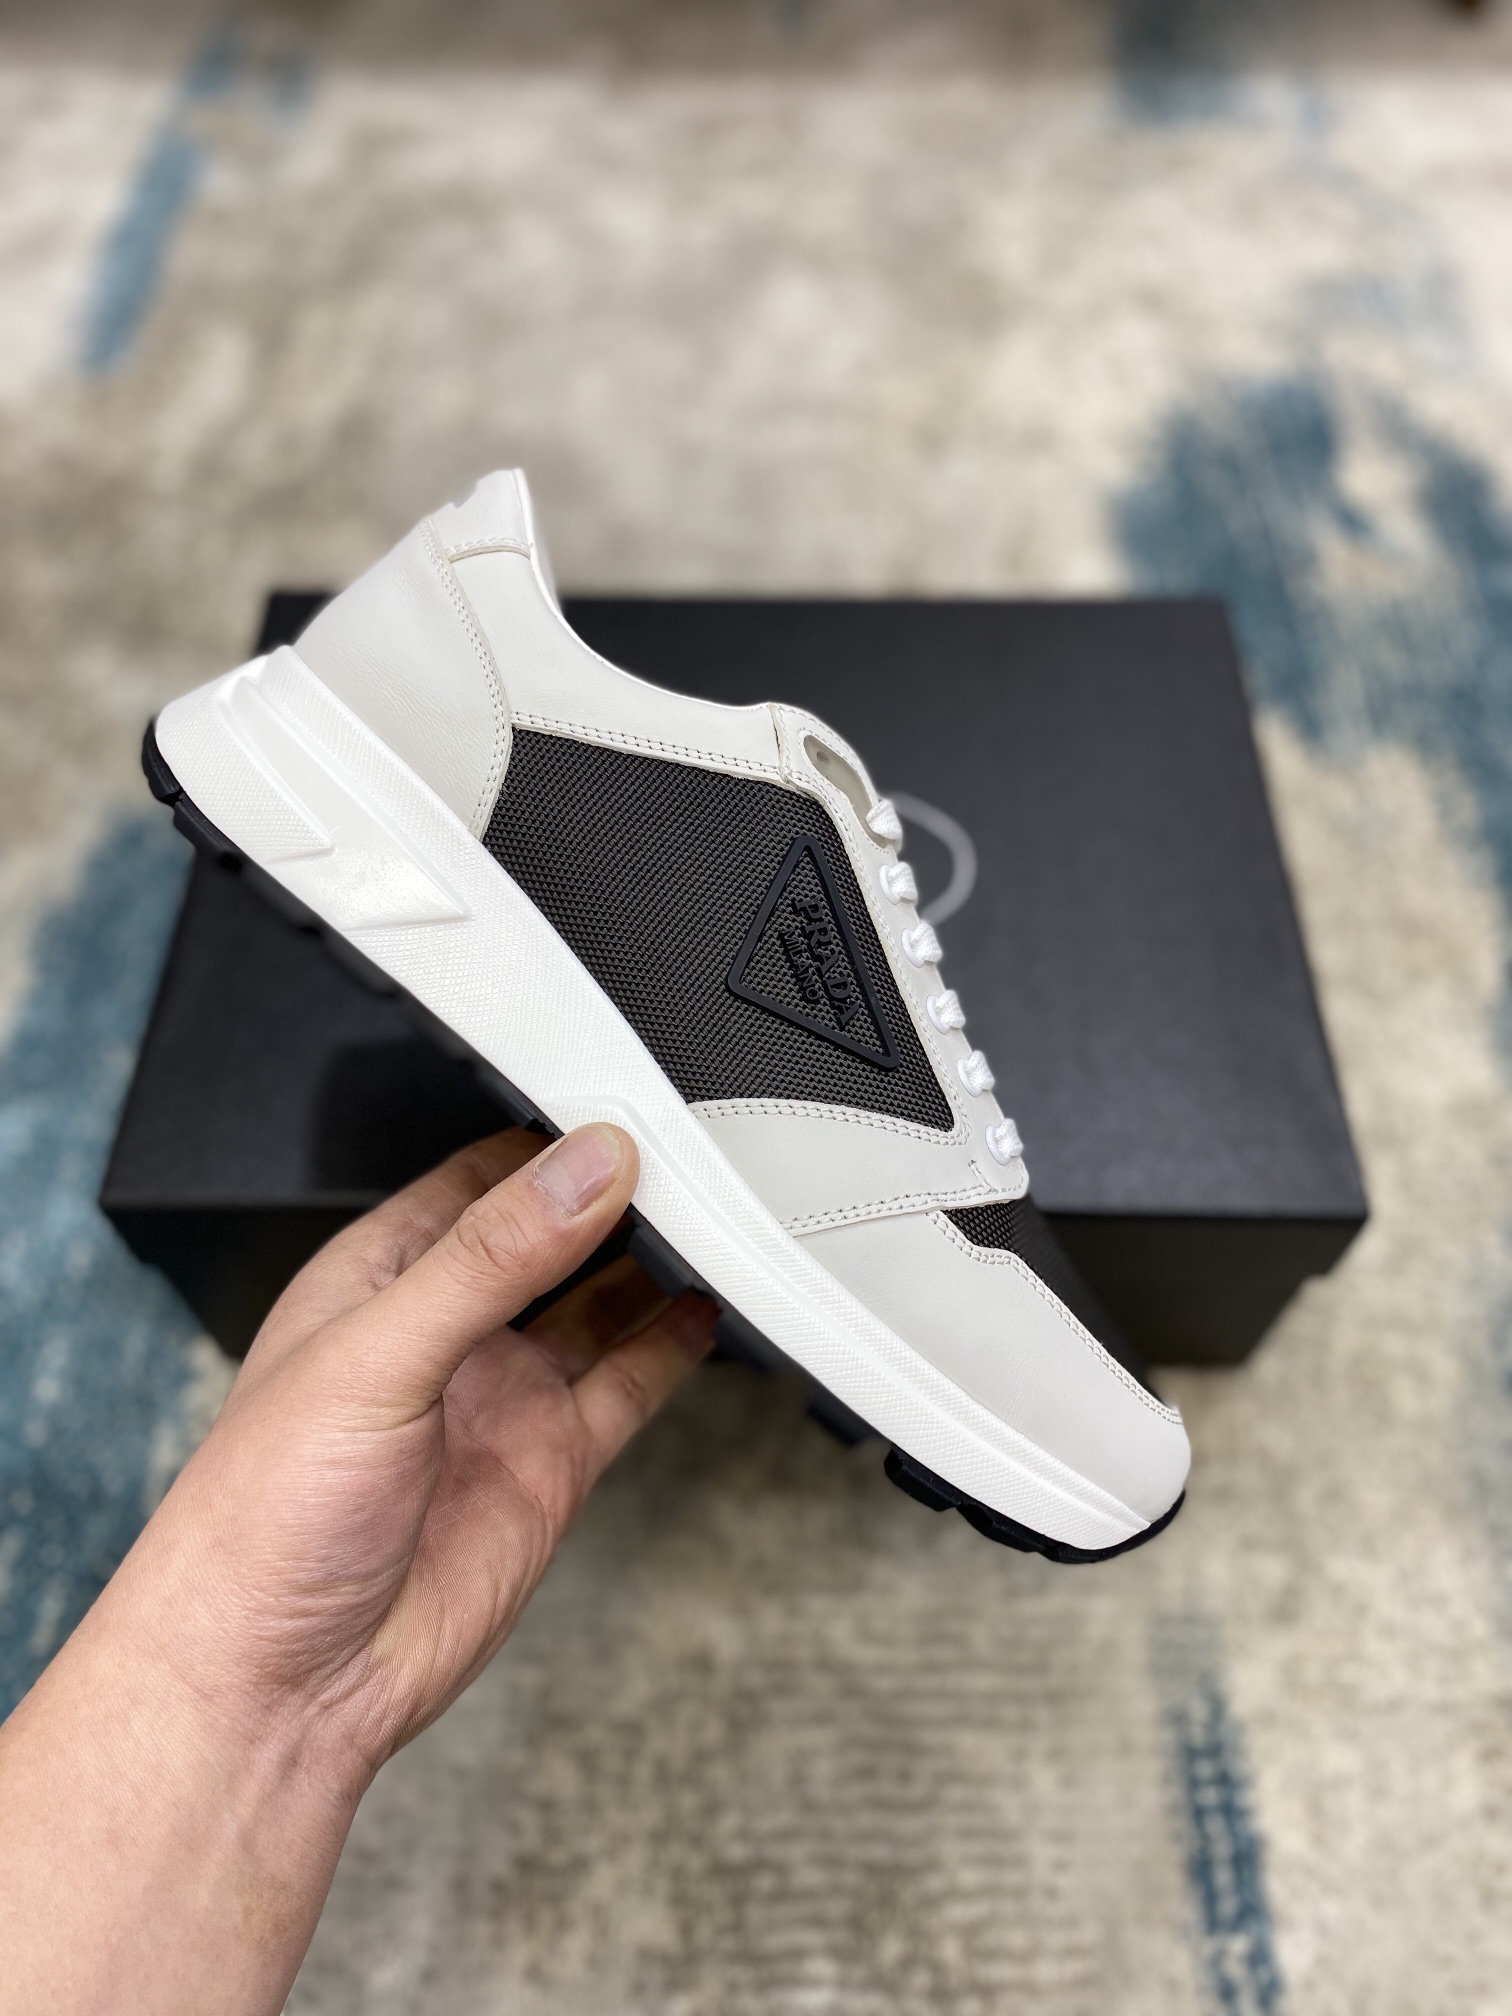 Prada Leisure Sneaker in White with Black